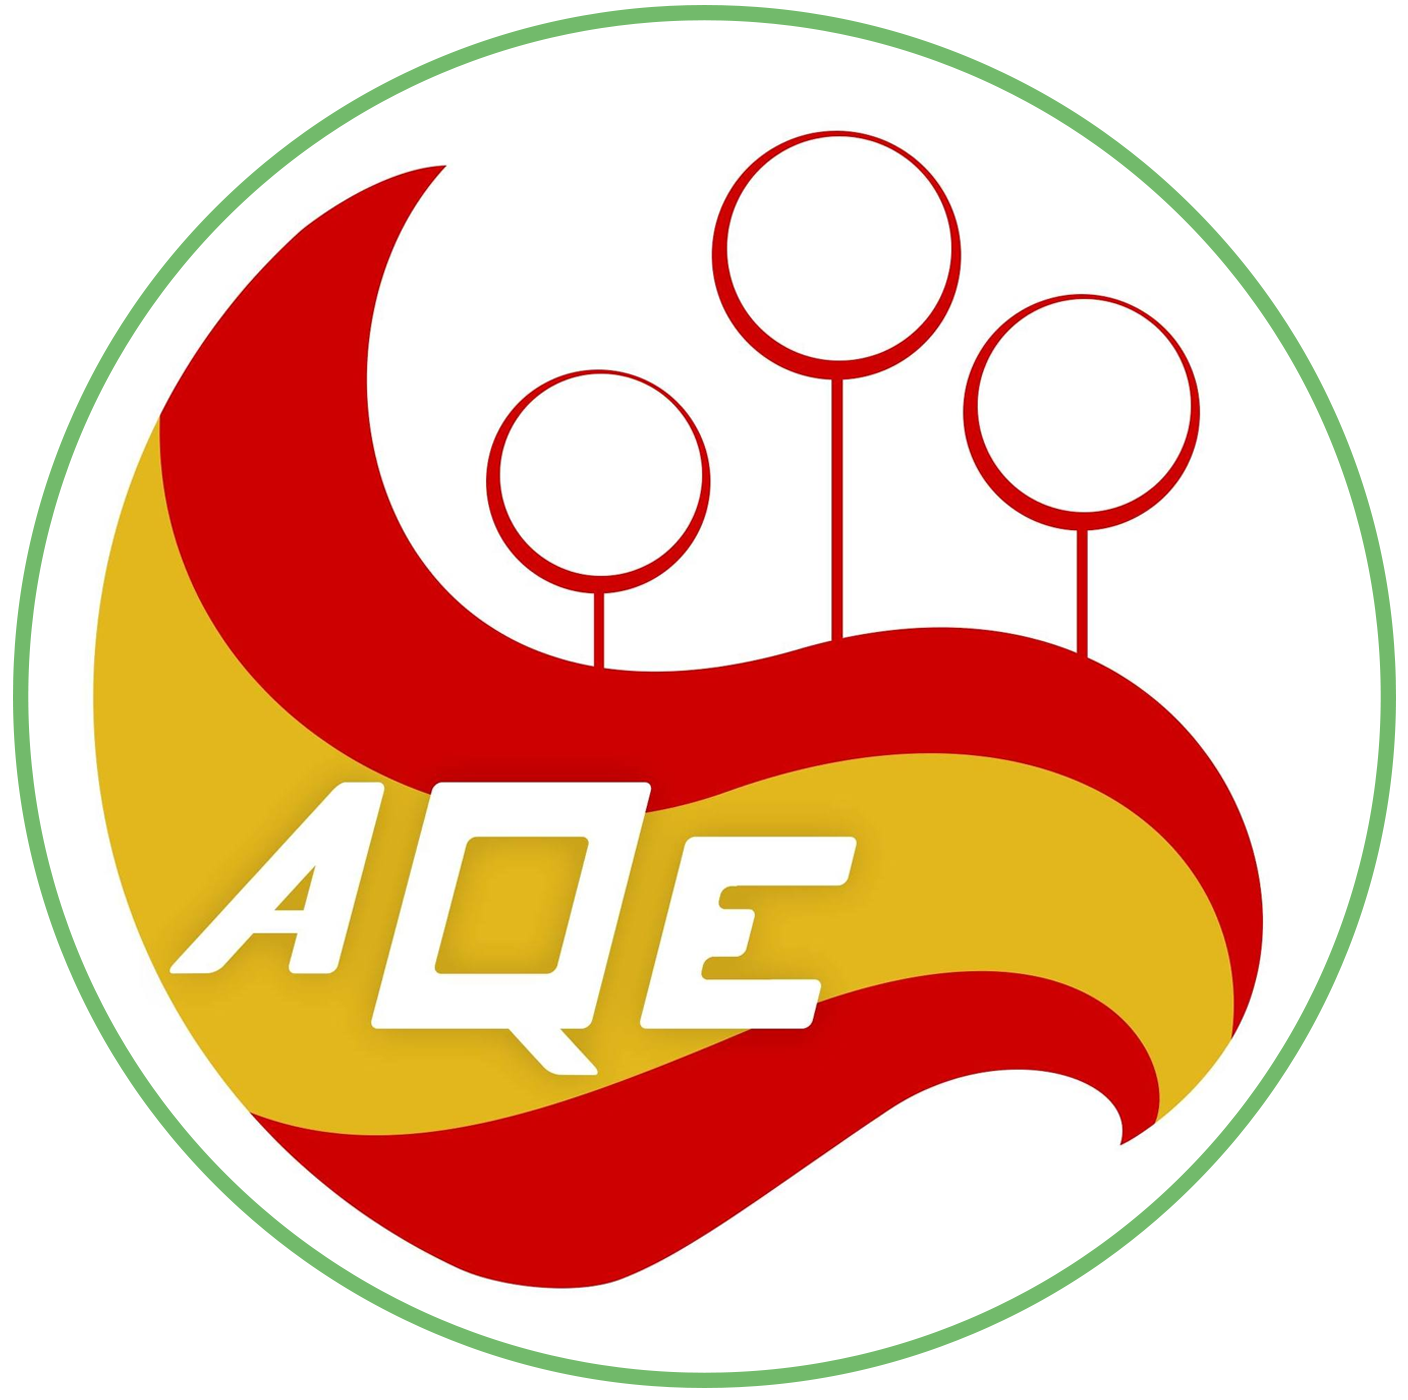 Spain Quadball logo